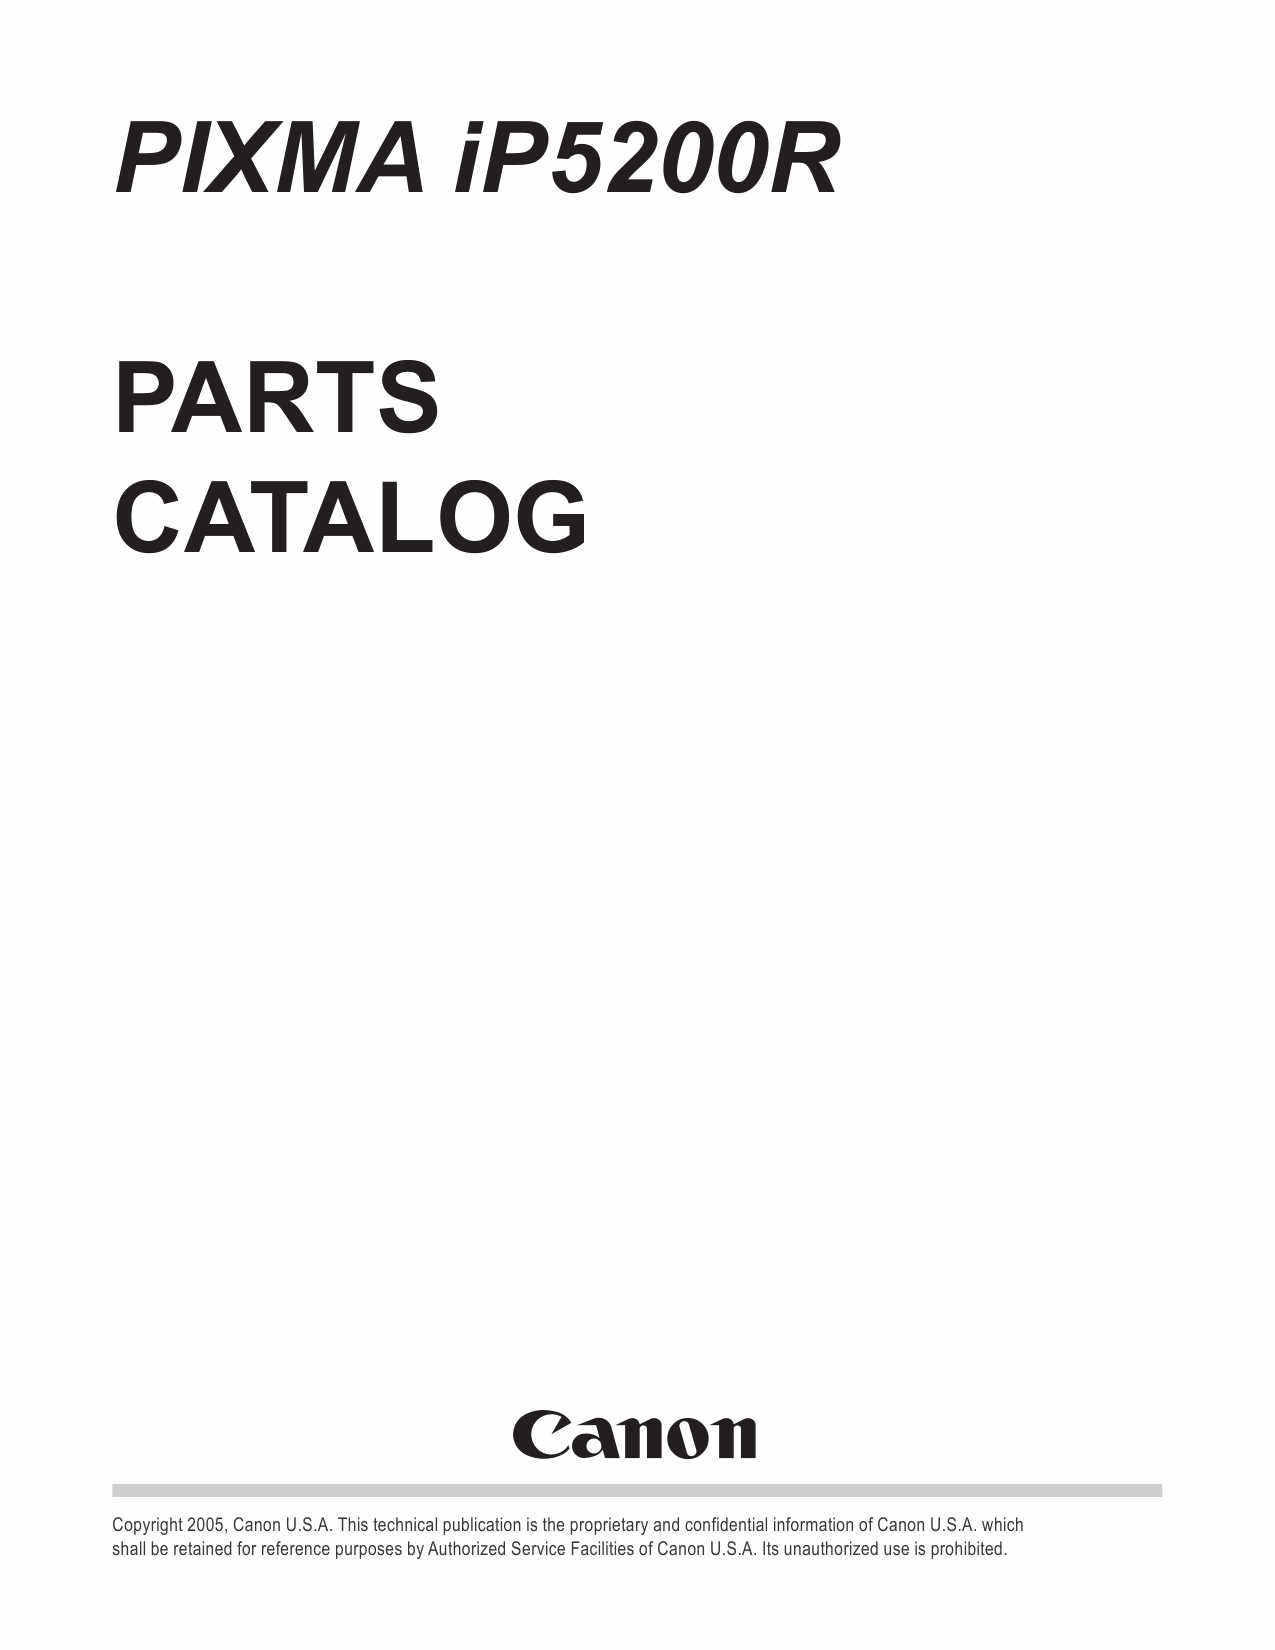 Canon PIXMA iP5200R Parts Catalog-1